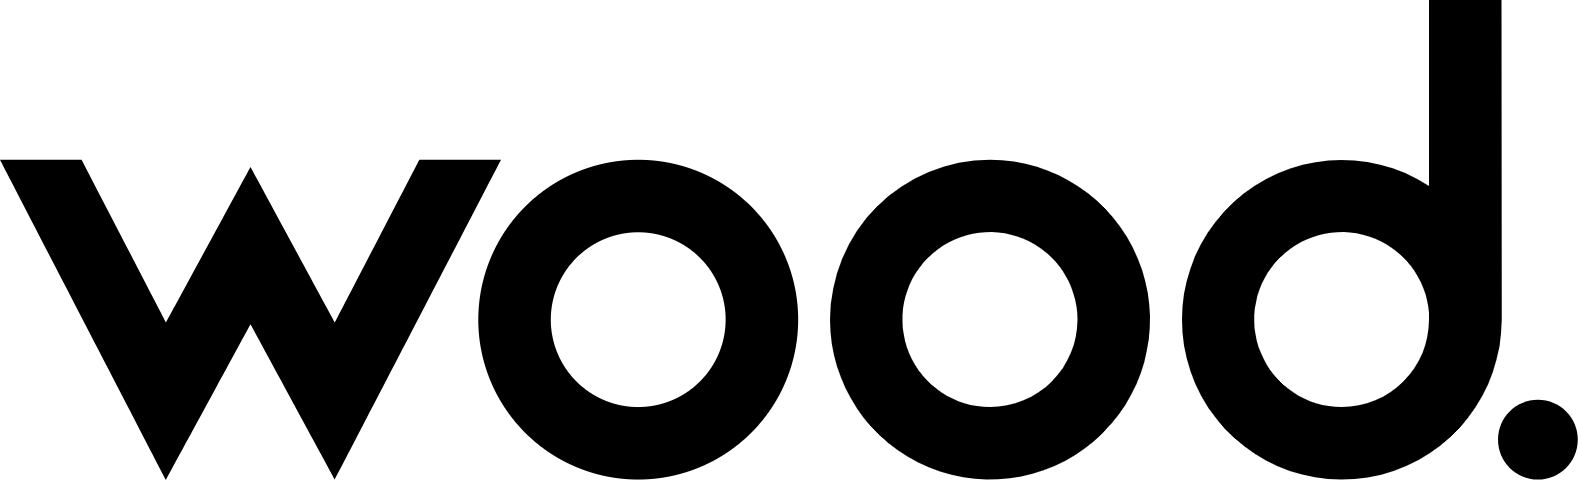 John Wood Group logo large (transparent PNG)